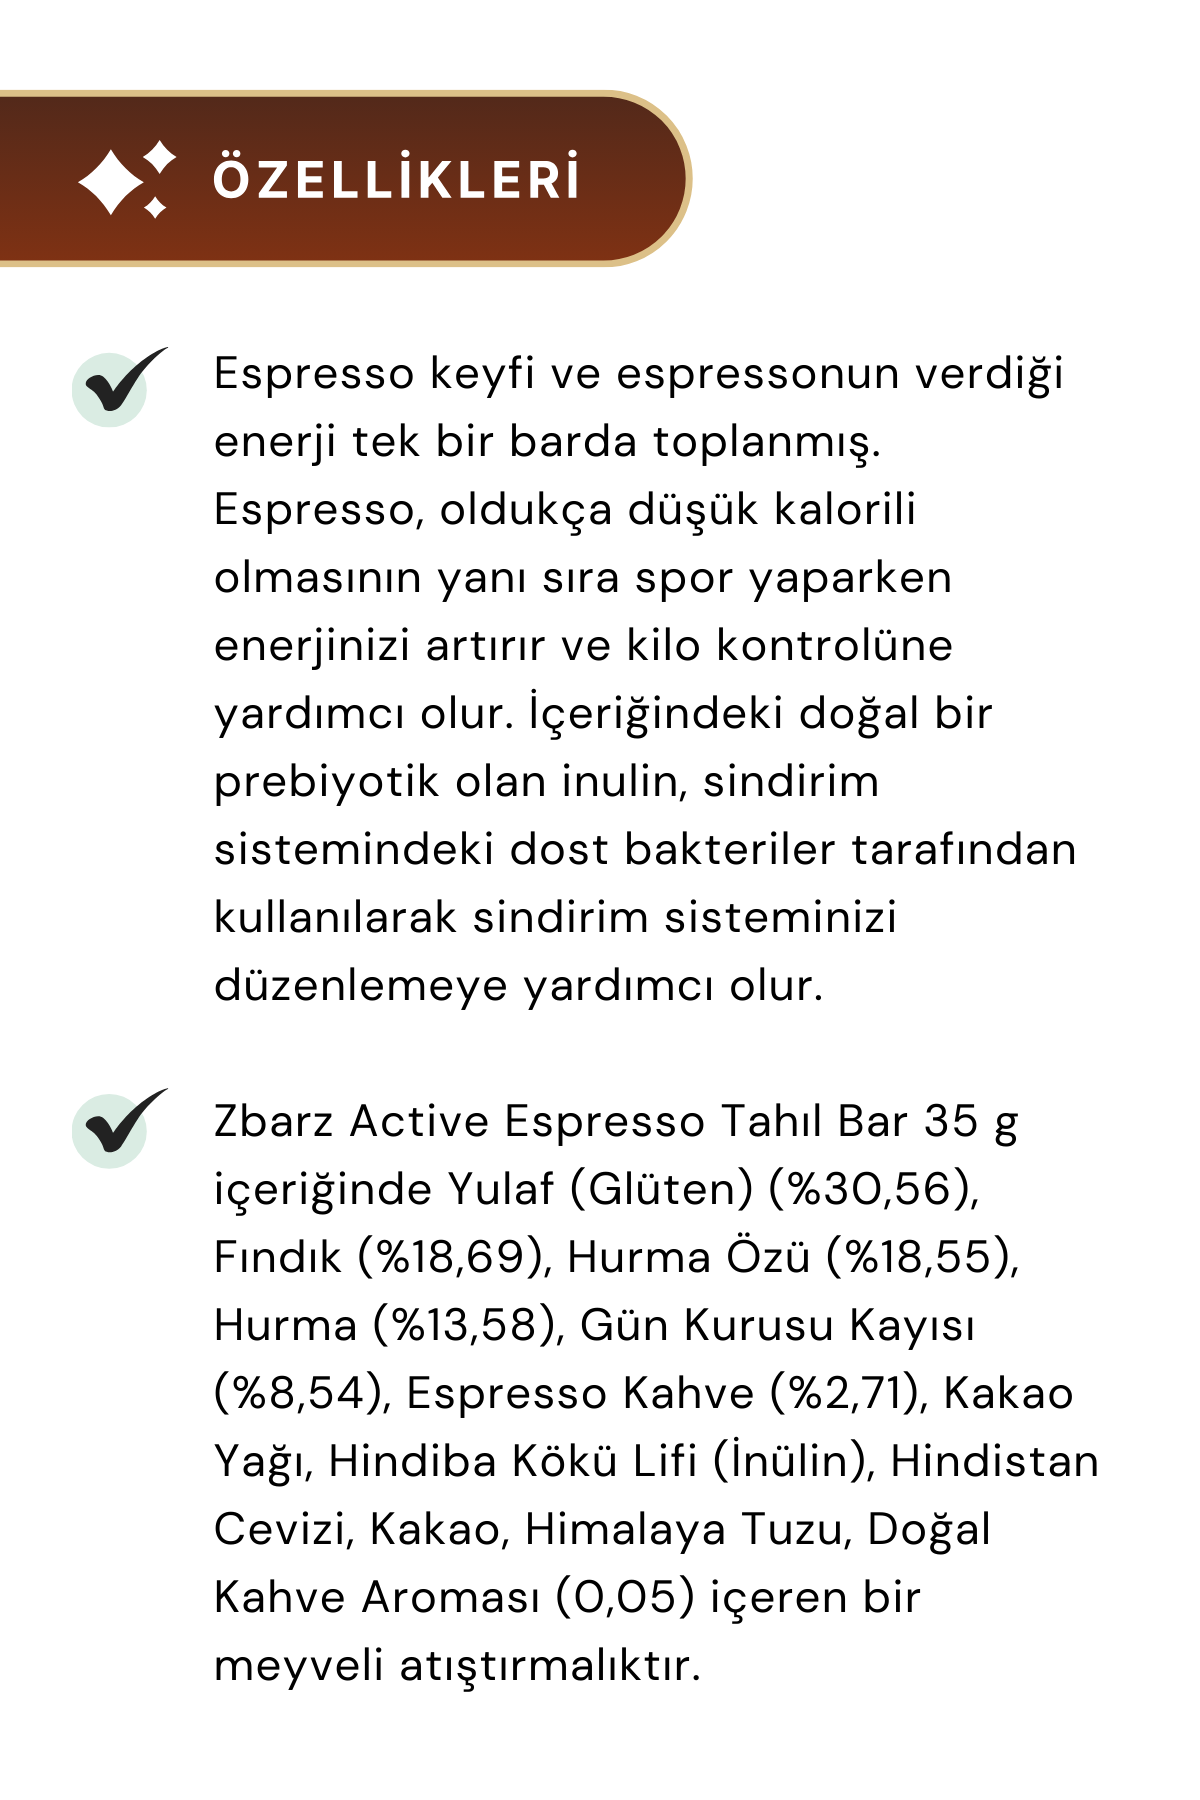 Zbarz Active Espresso Tahıl Bar 35 g 6'lı Paket